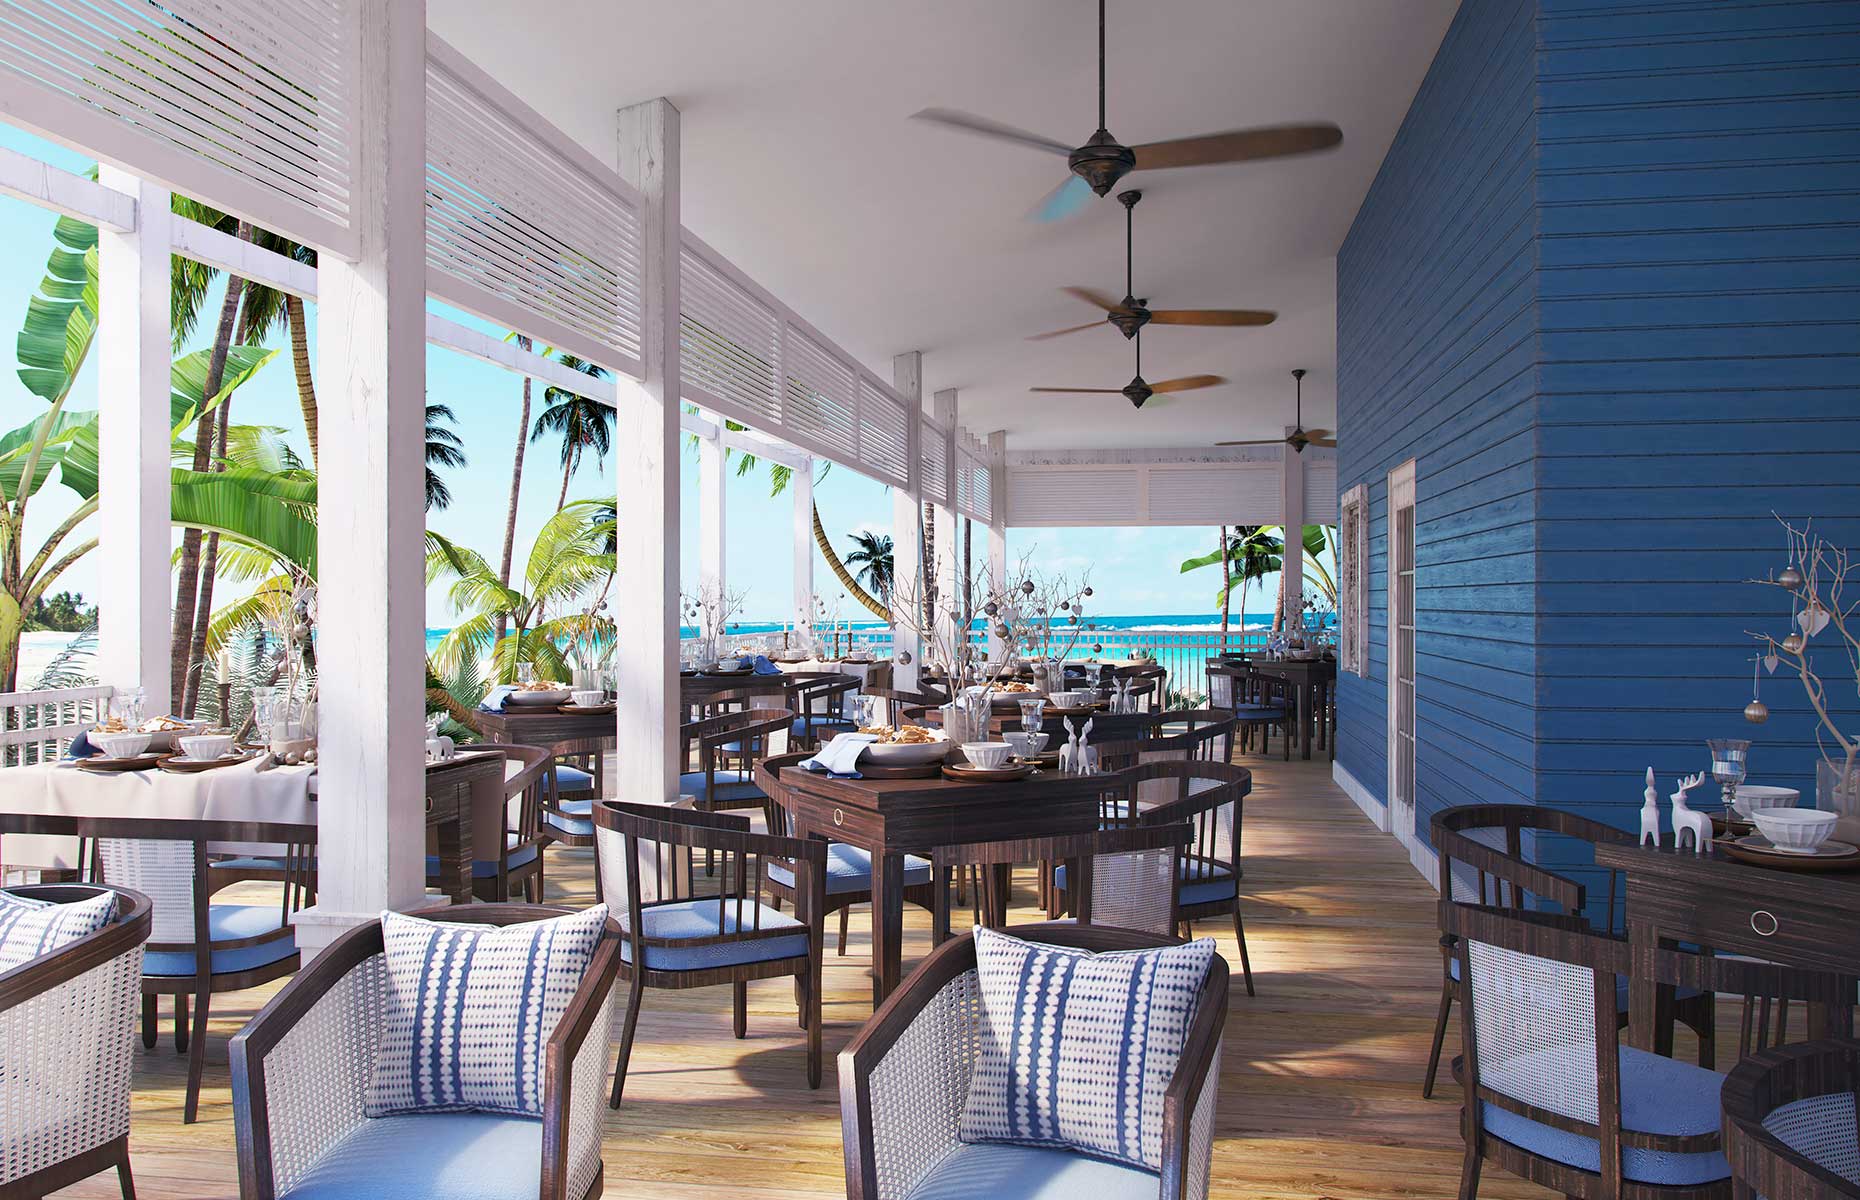 Restaurant at Ocean Cay (Image: Courtesy of MSC)